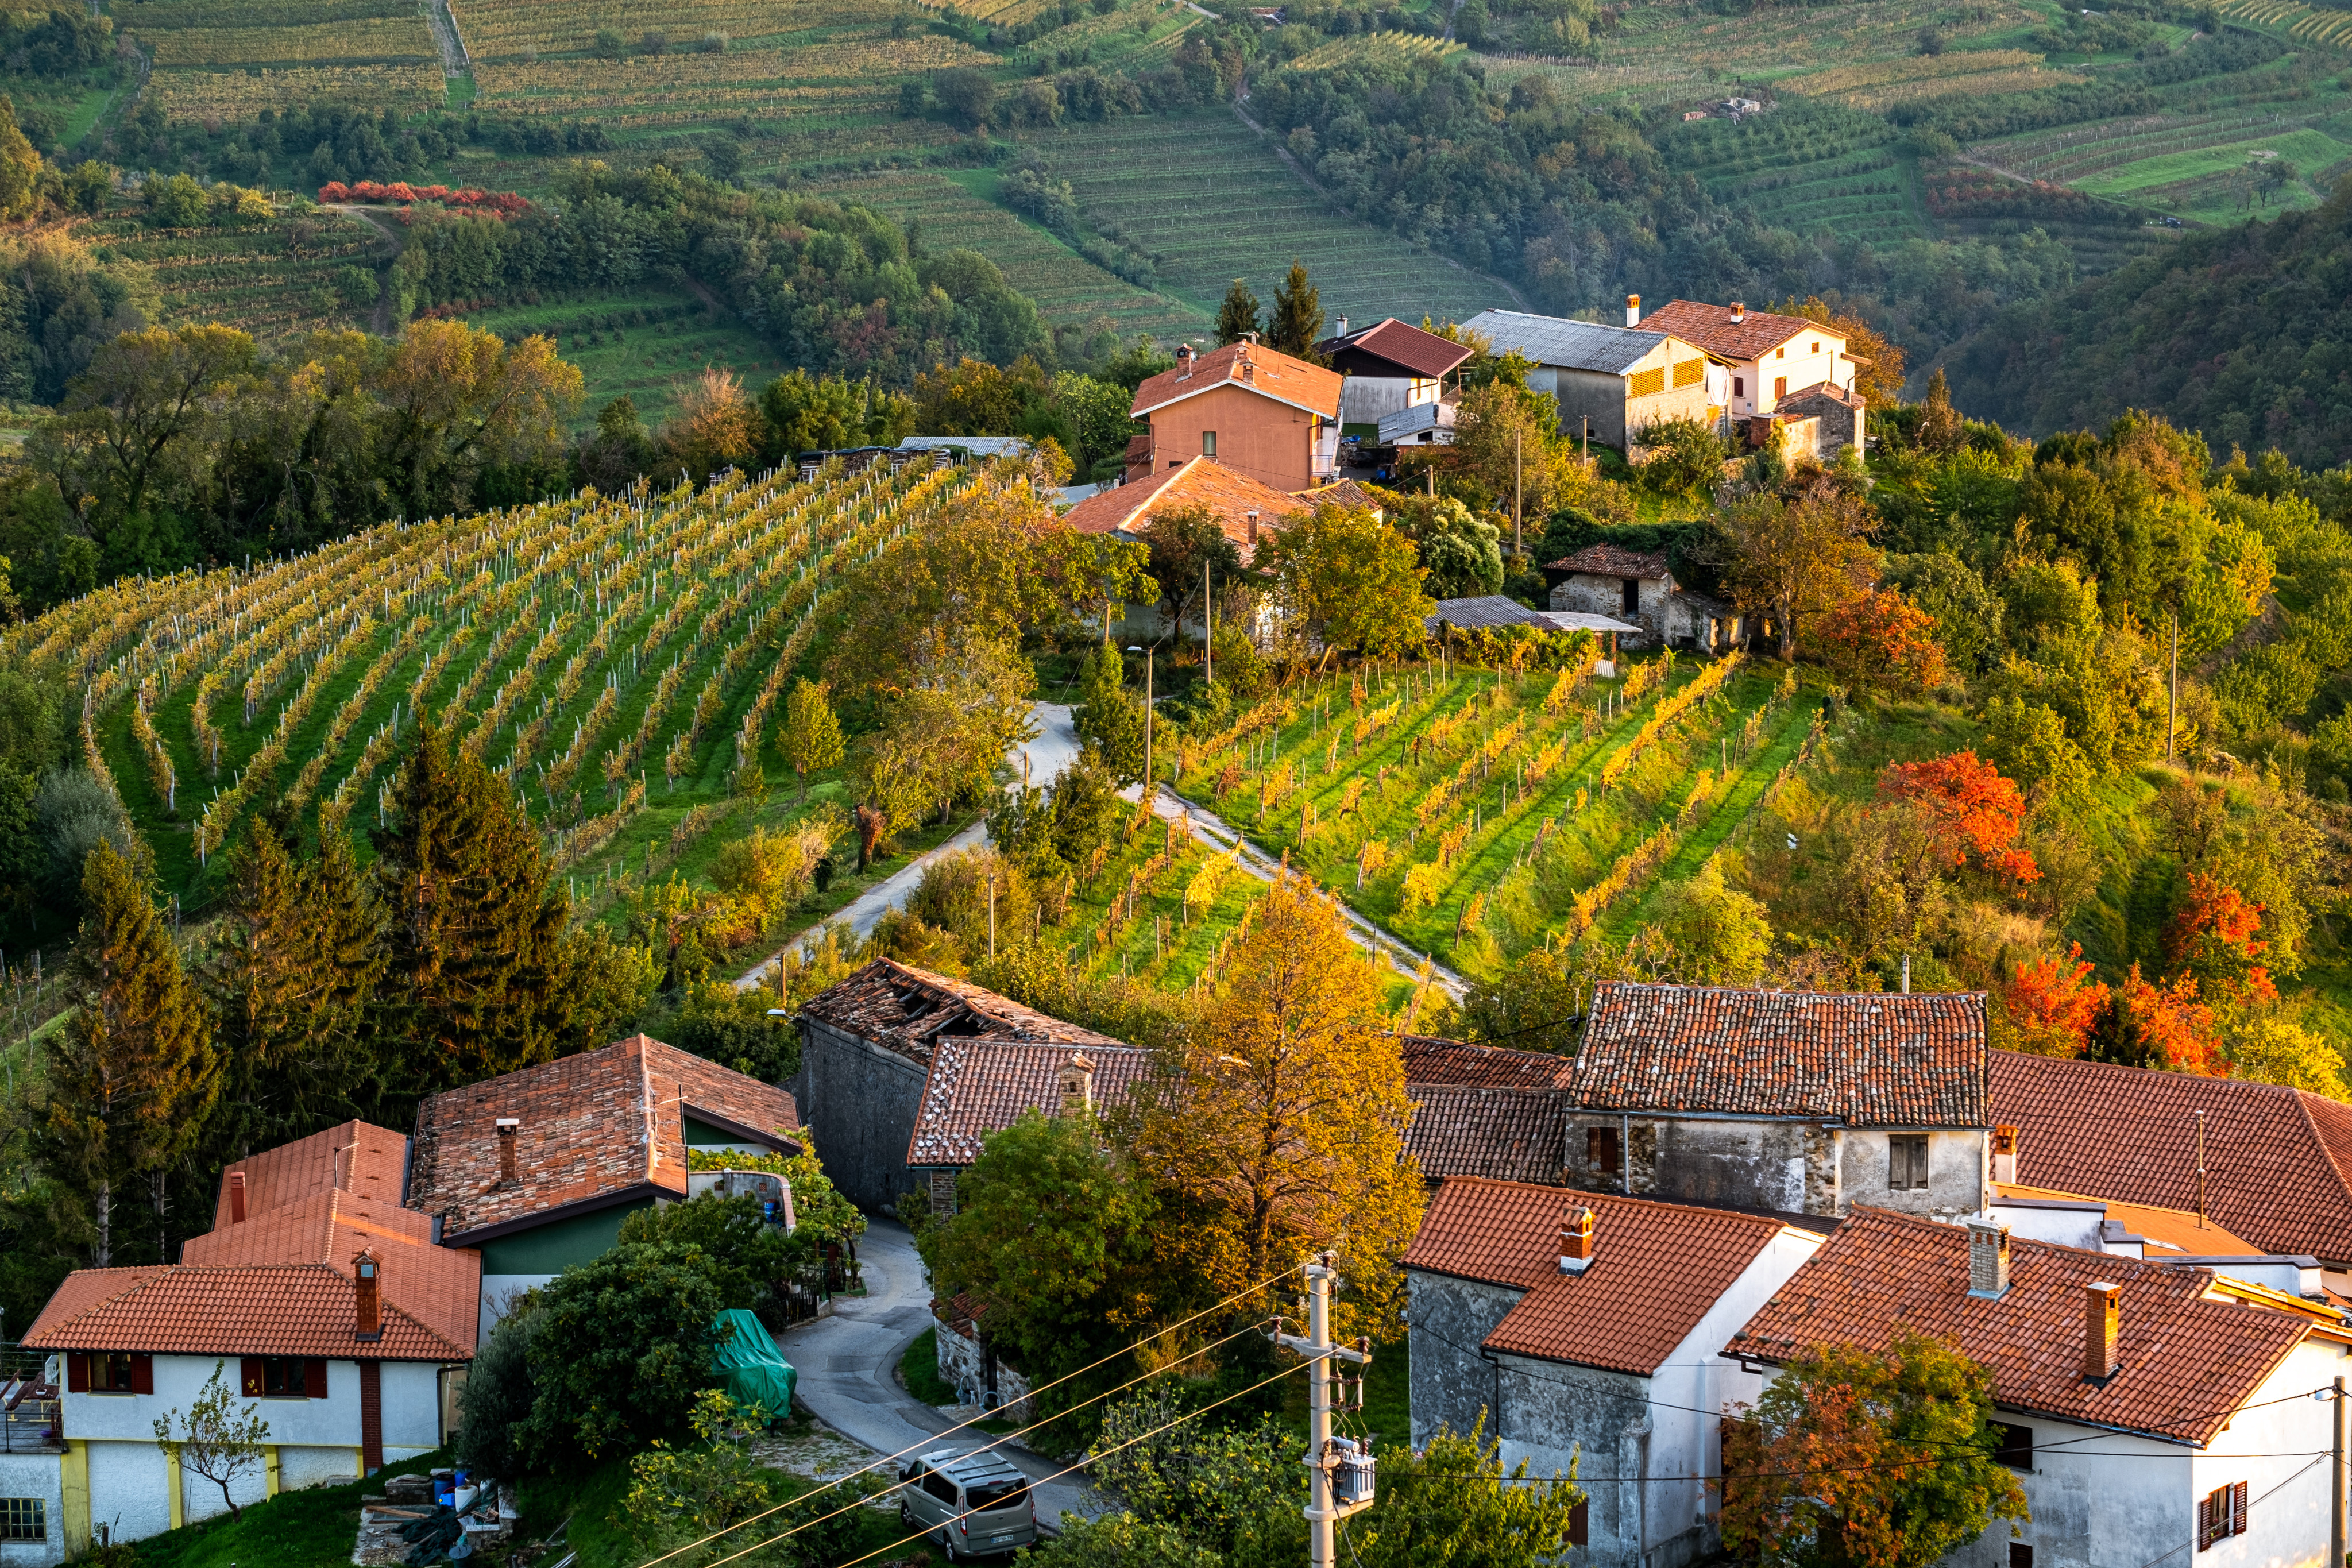 Smartno village in Goriska Brda, a famous wine region of Slovenia located near Italy. Photo:  Shutterstock